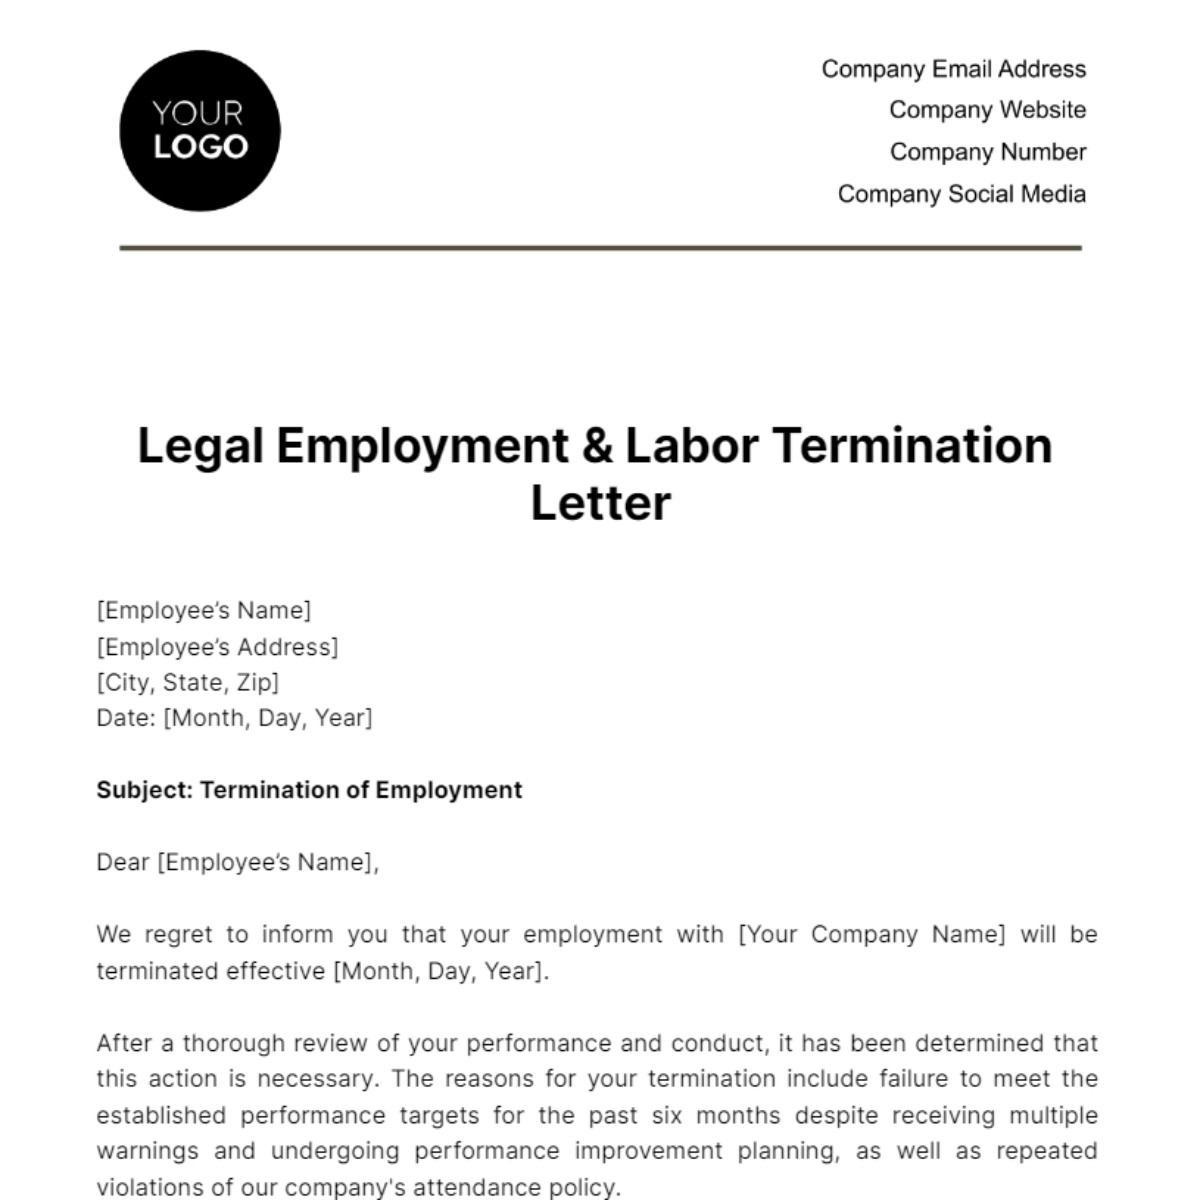 Legal Employment & Labor Termination Letter Template